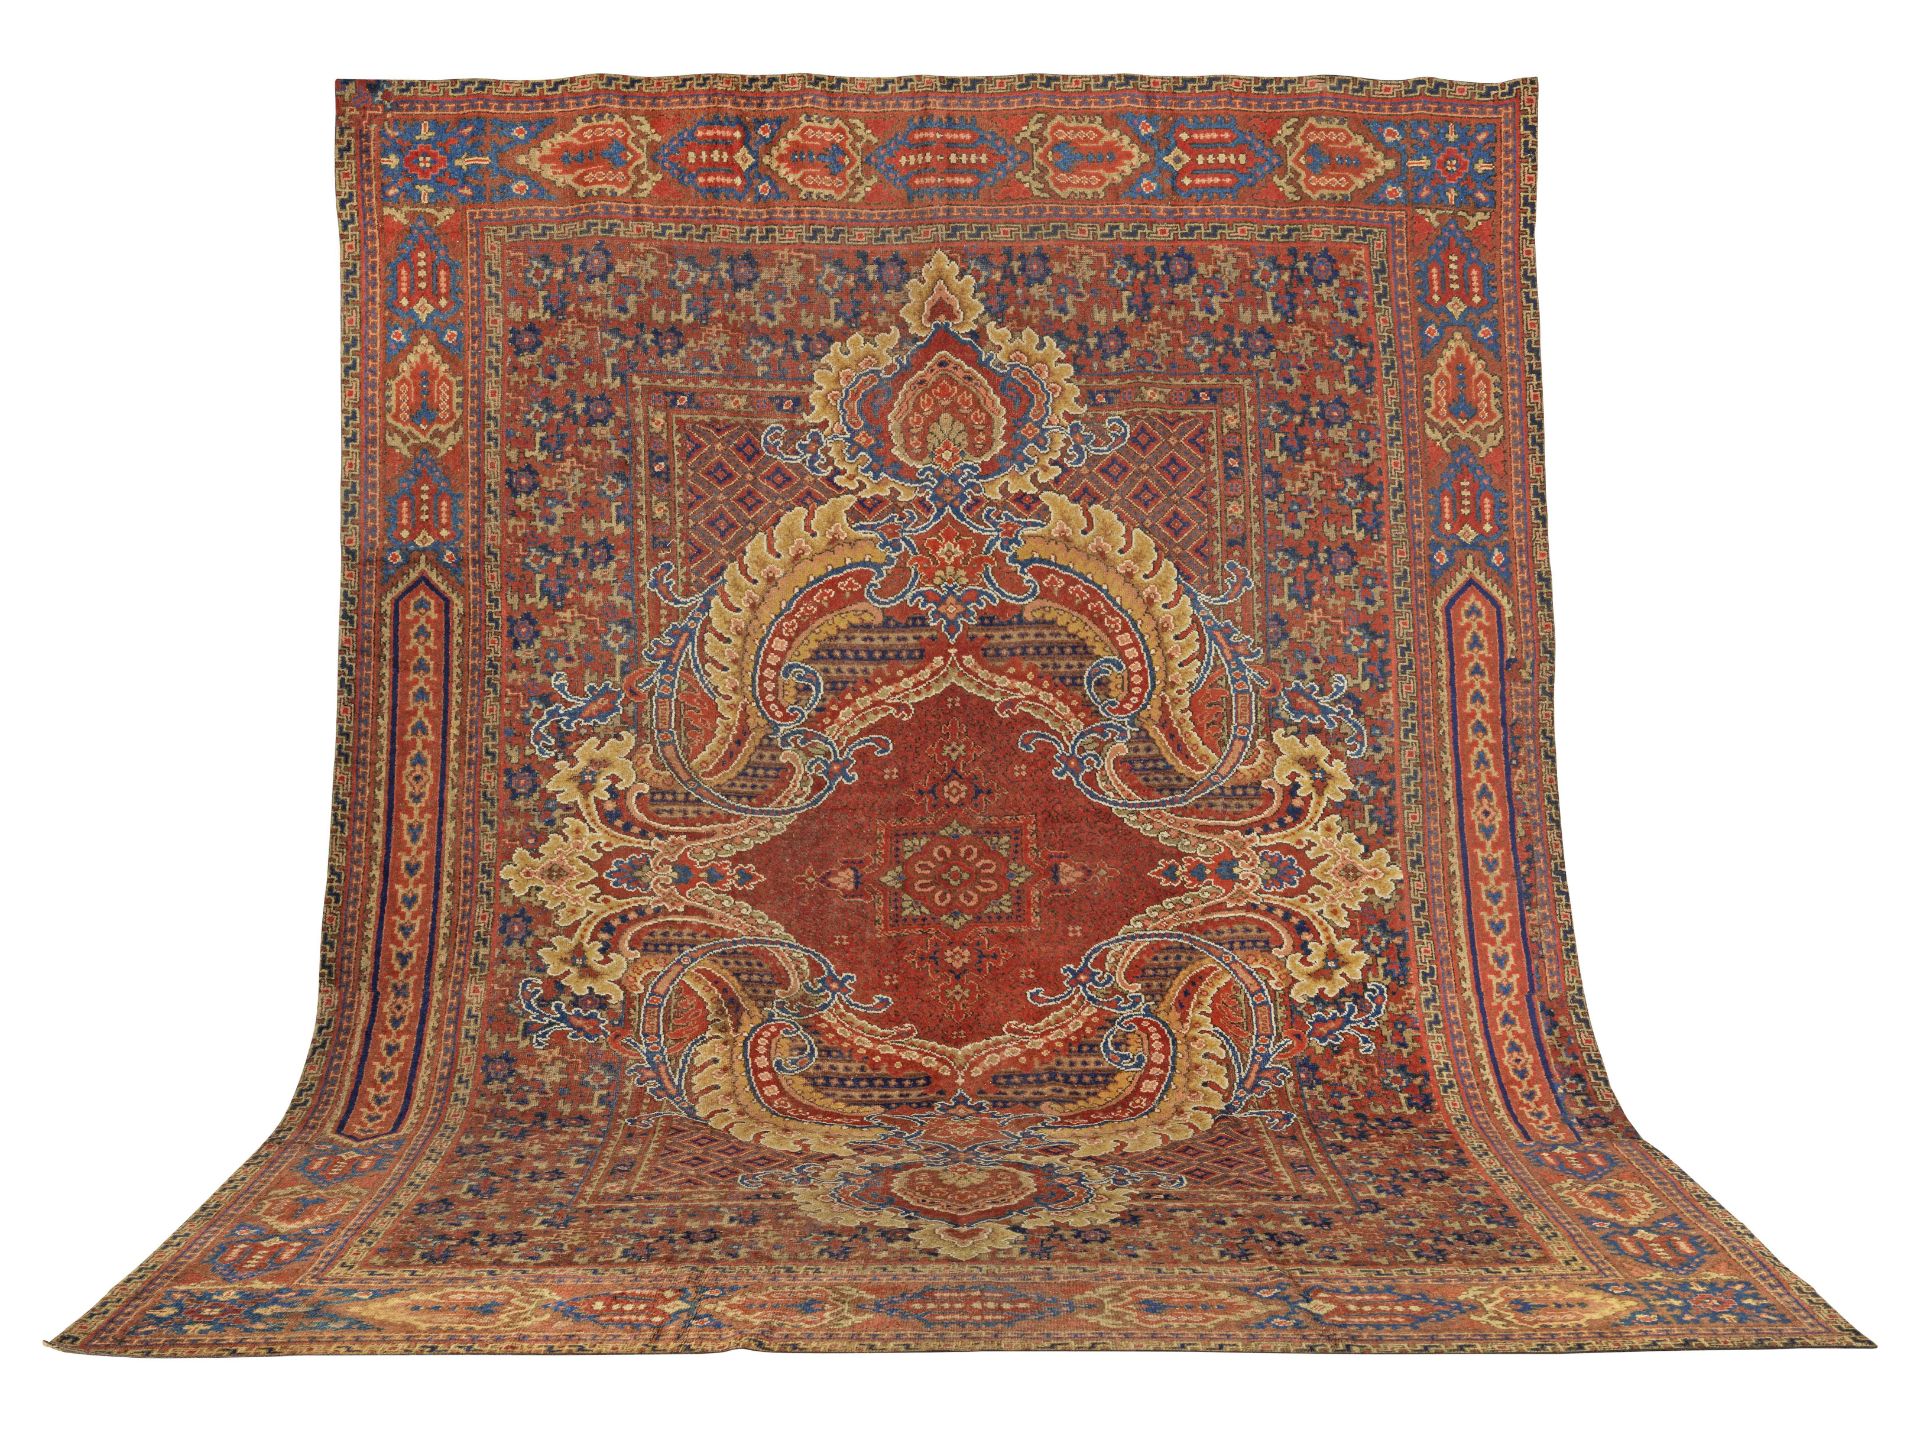 A striking Axminster carpet with central medallion England 641cm x 484cm